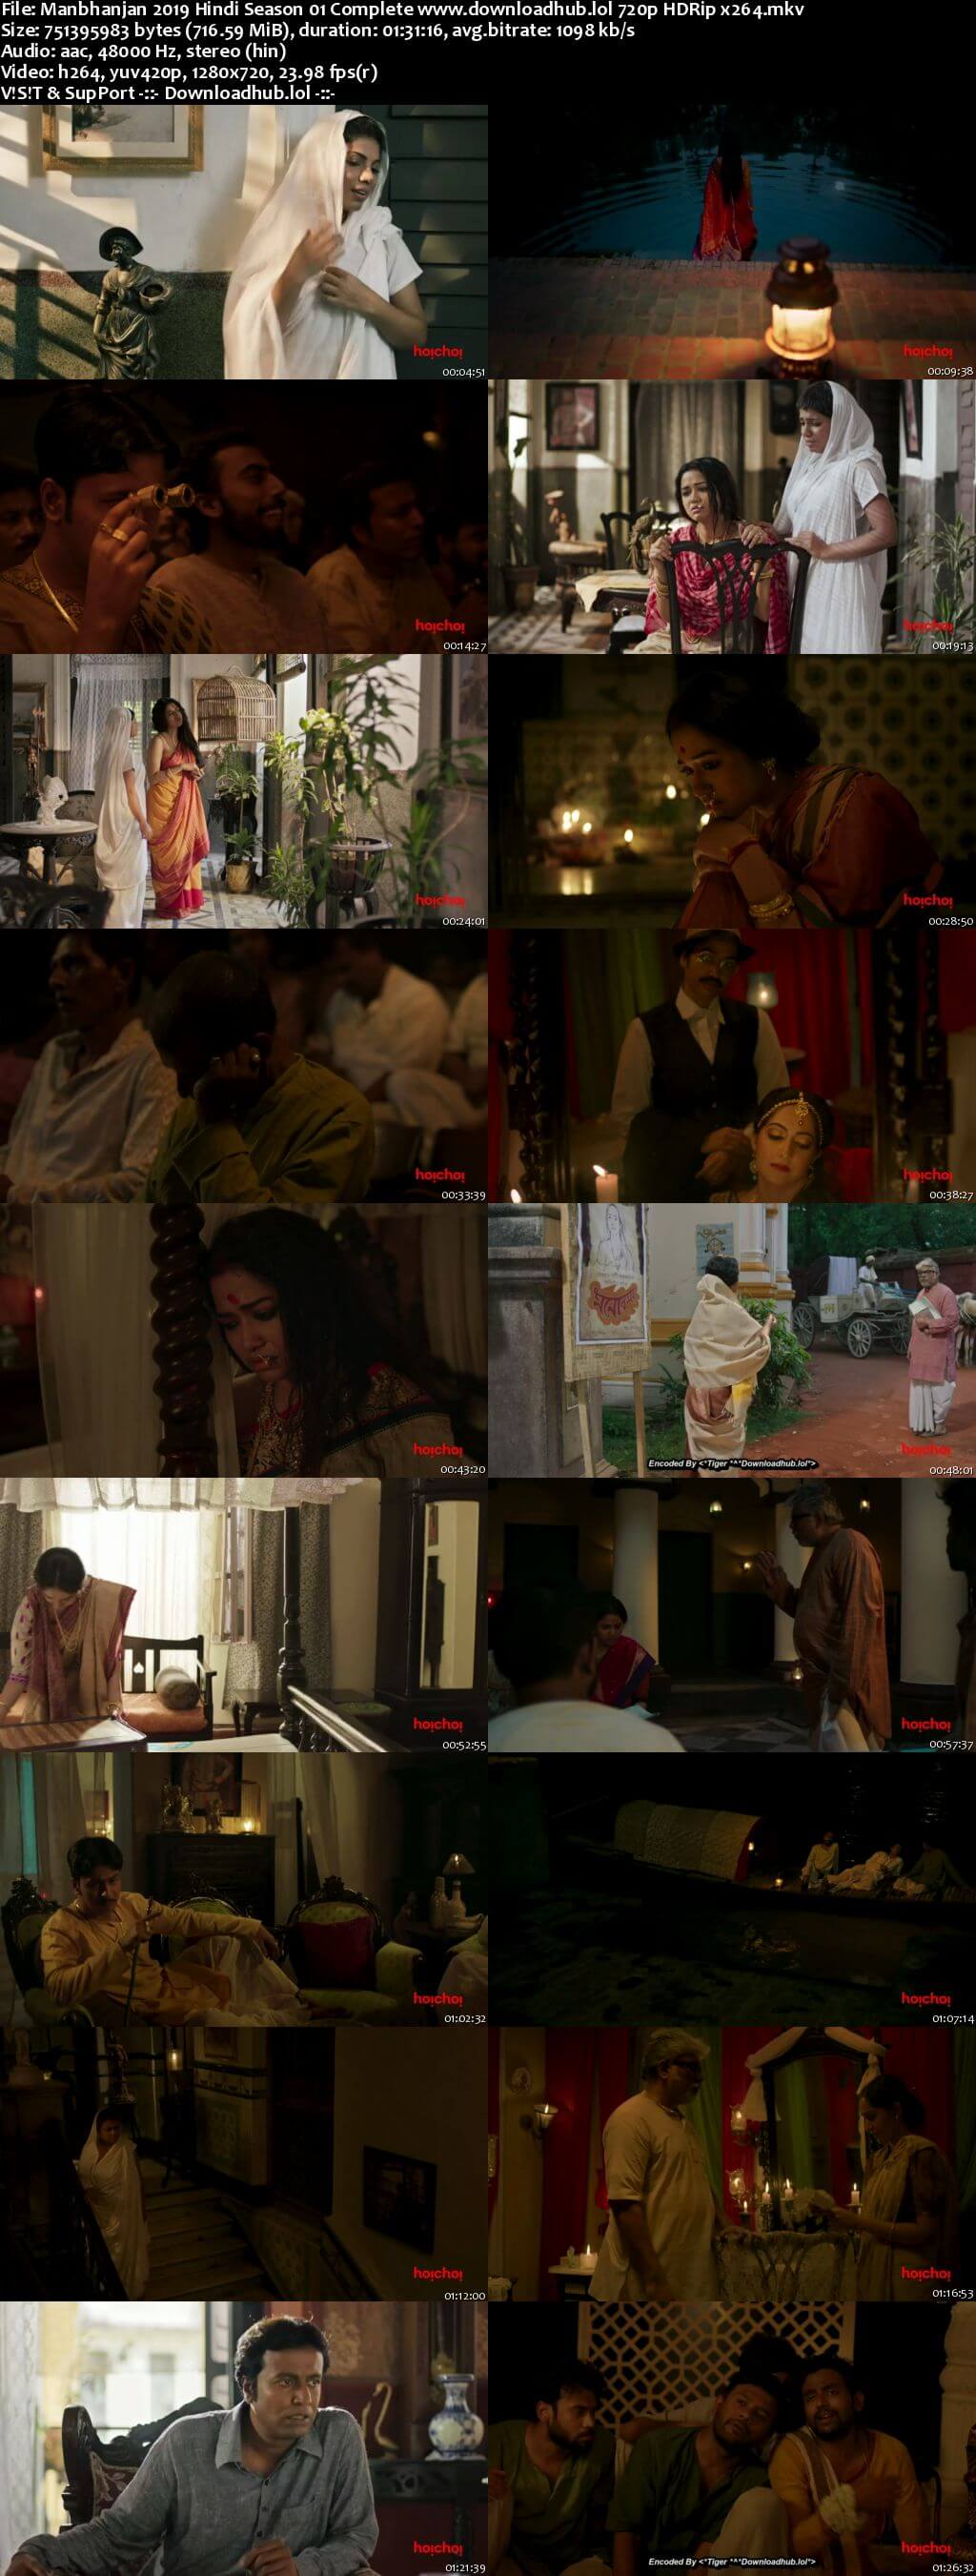 Manbhanjan 2019 Hindi Season 01 Complete 720p HDRip x264